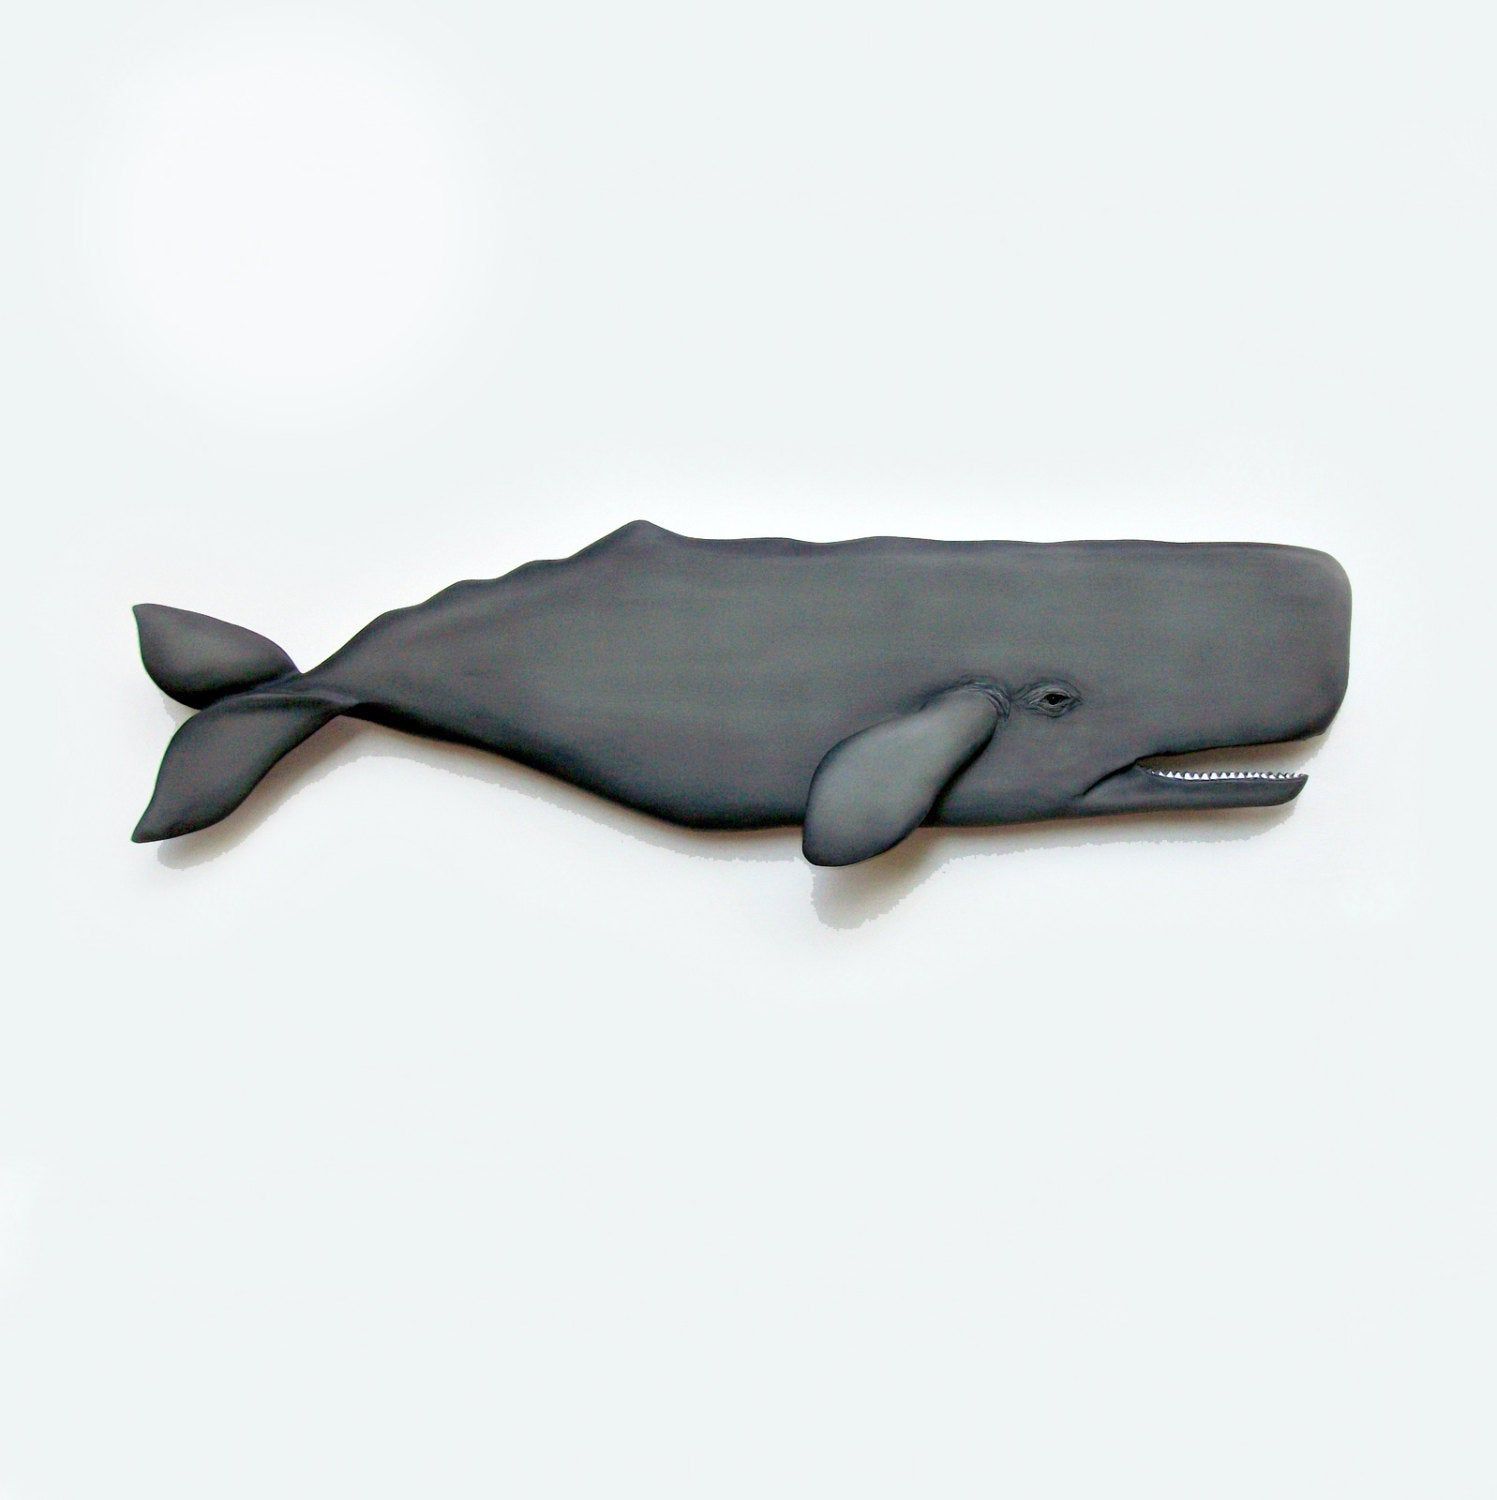 Sperm whale sculpture